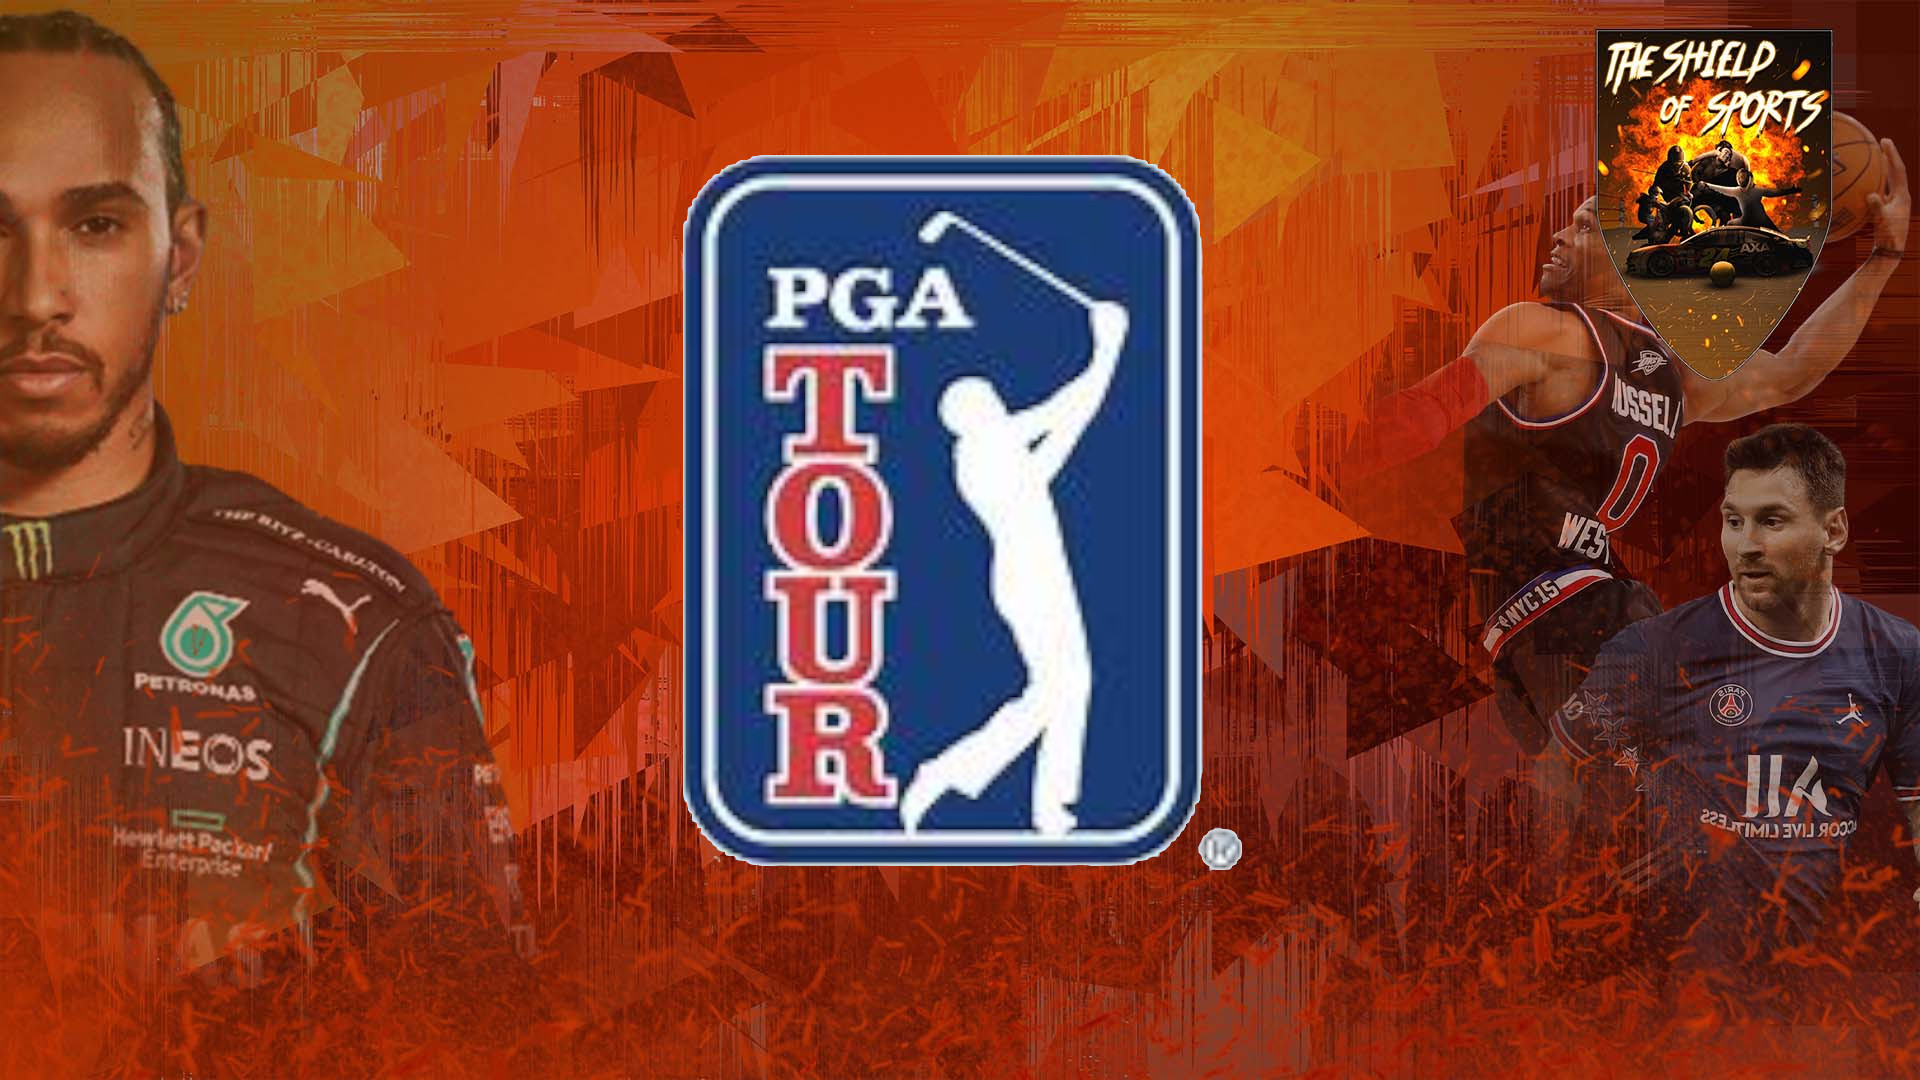 PGA Tour: Accuse di anticompetitivà contro LIV Golf